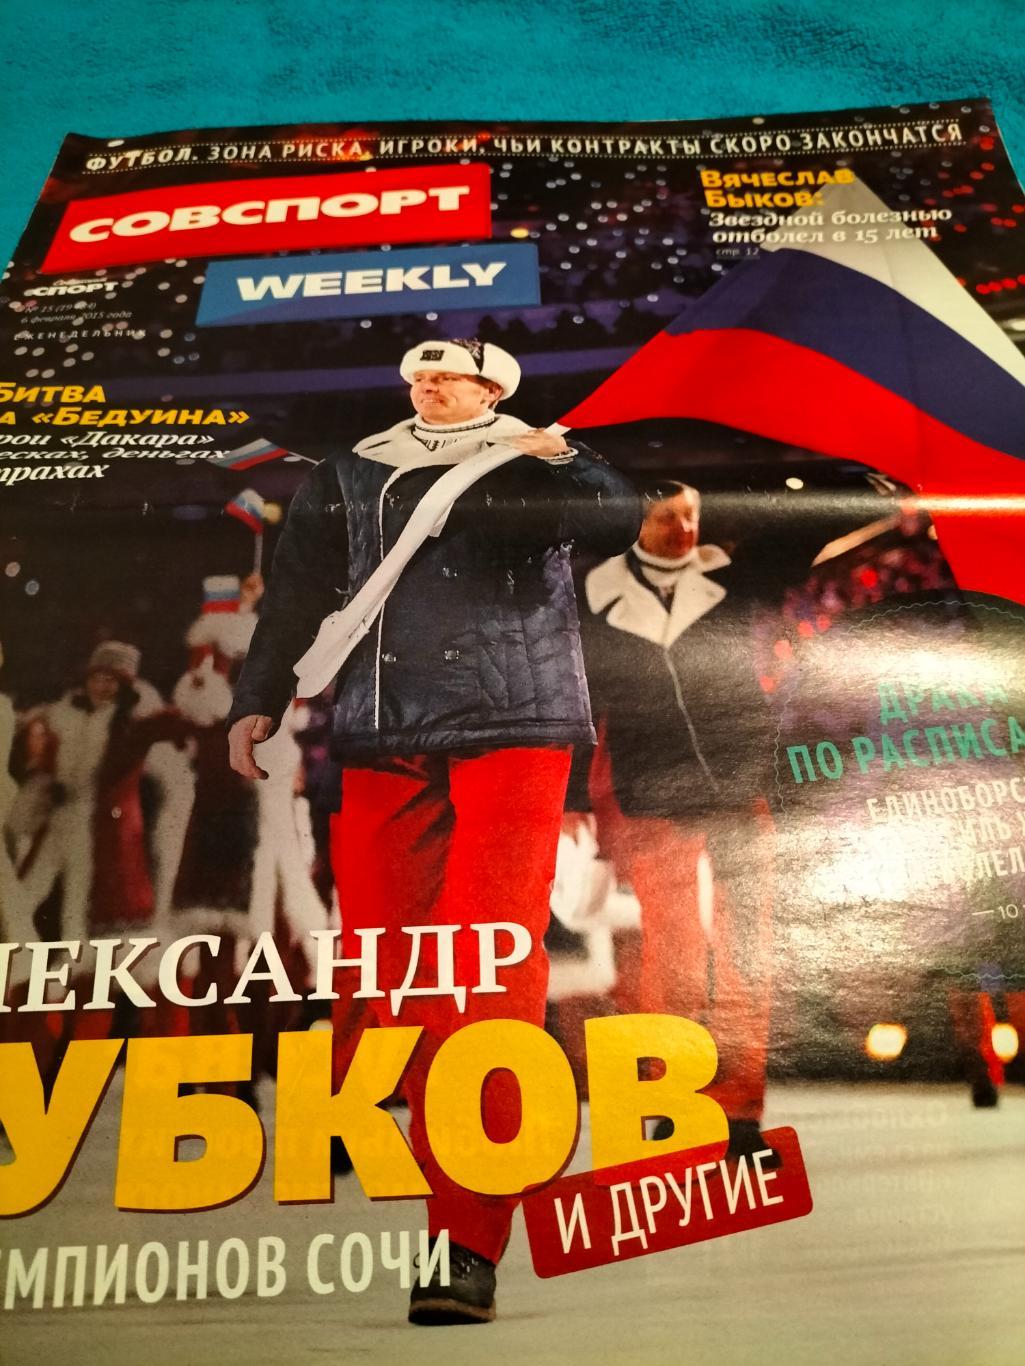 Советский Спорт Weekly №15 2015 год.